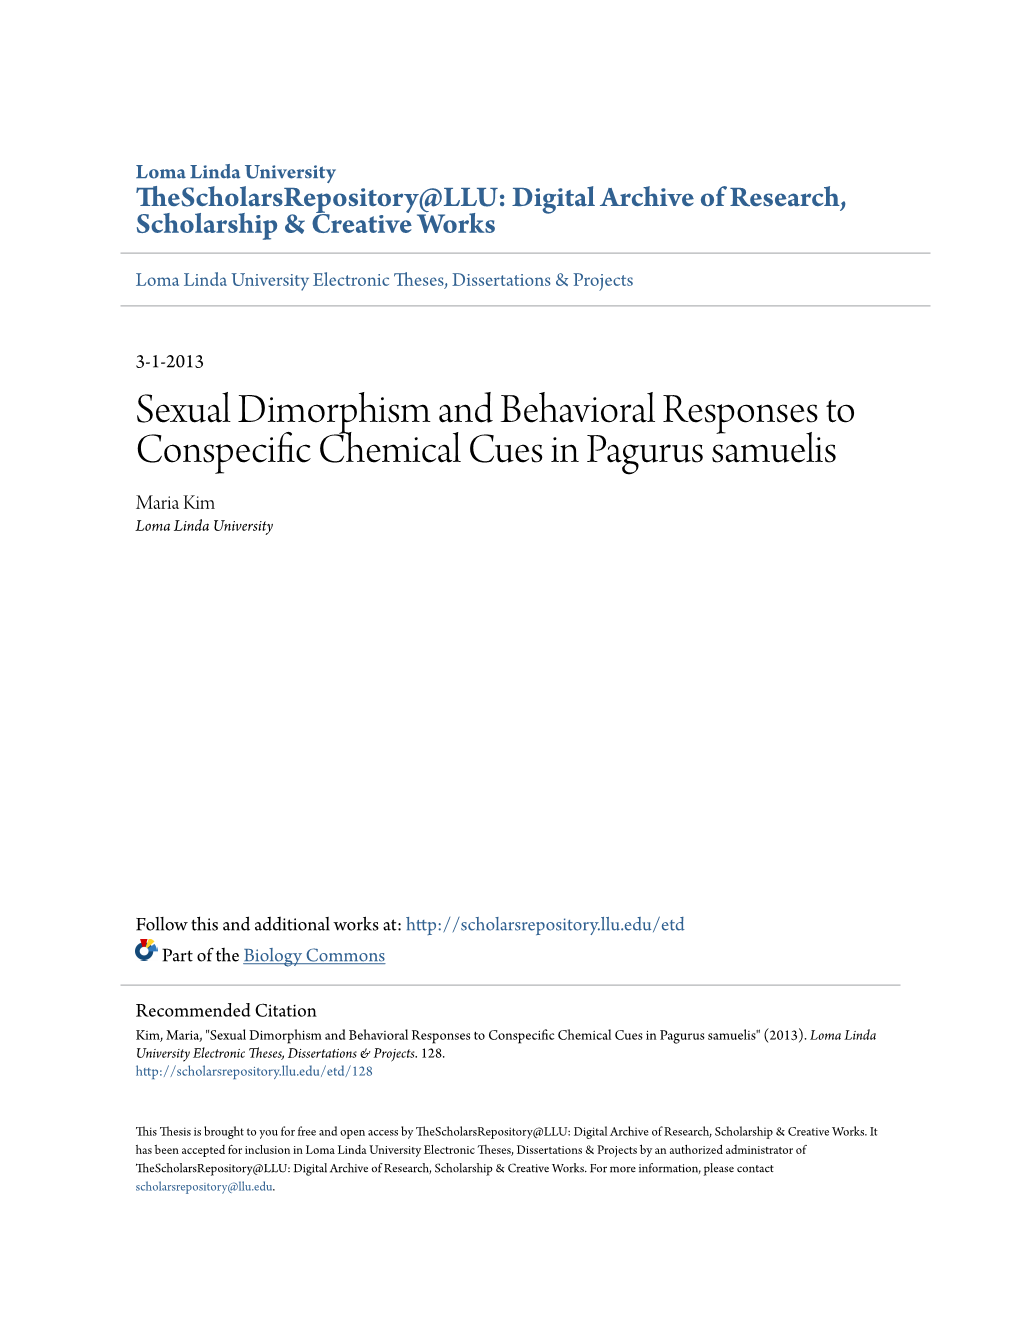 Sexual Dimorphism and Behavioral Responses to Conspecific Hec Mical Cues in Pagurus Samuelis Maria Kim Loma Linda University